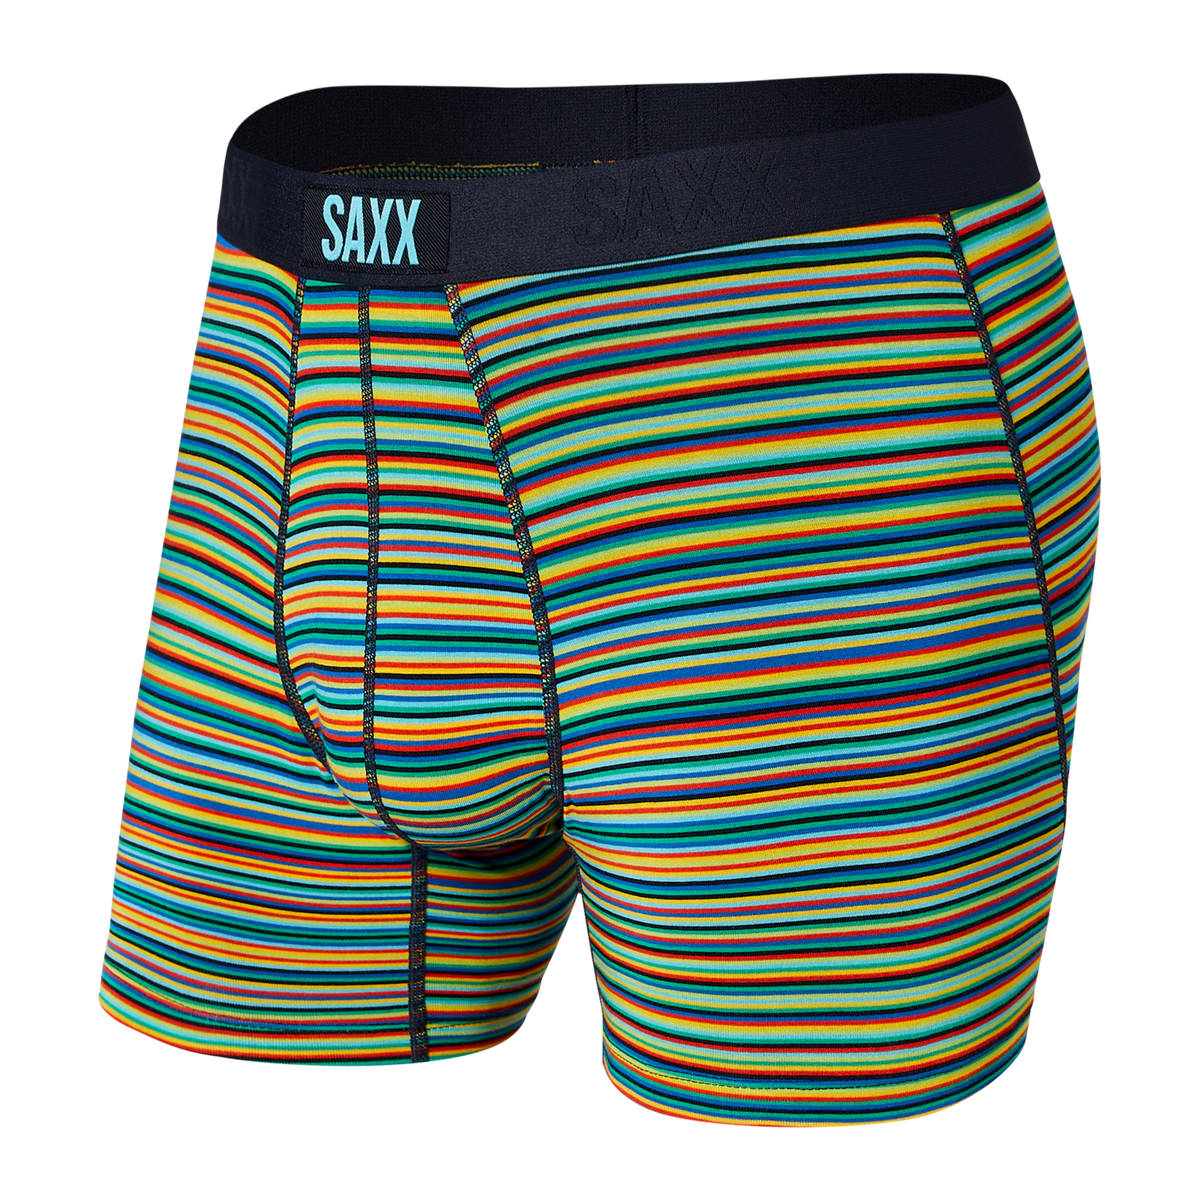 SAXX Men's Vibe Boxer Brief Underwear - Grey Sushi Doobie Doo